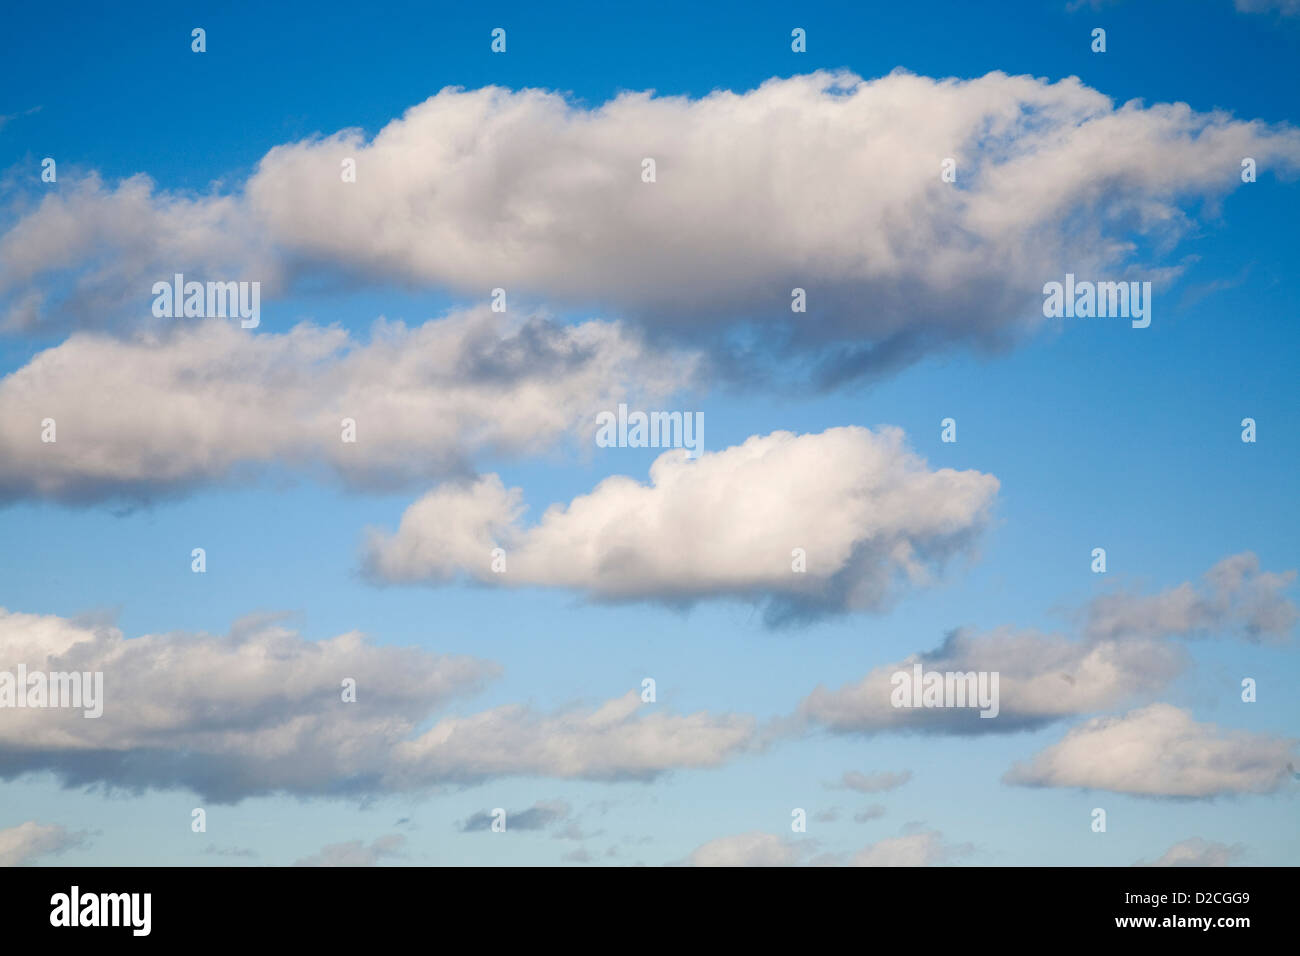 america, caribbean sea, hispaniola island, dominican republic, sky, clouds Stock Photo